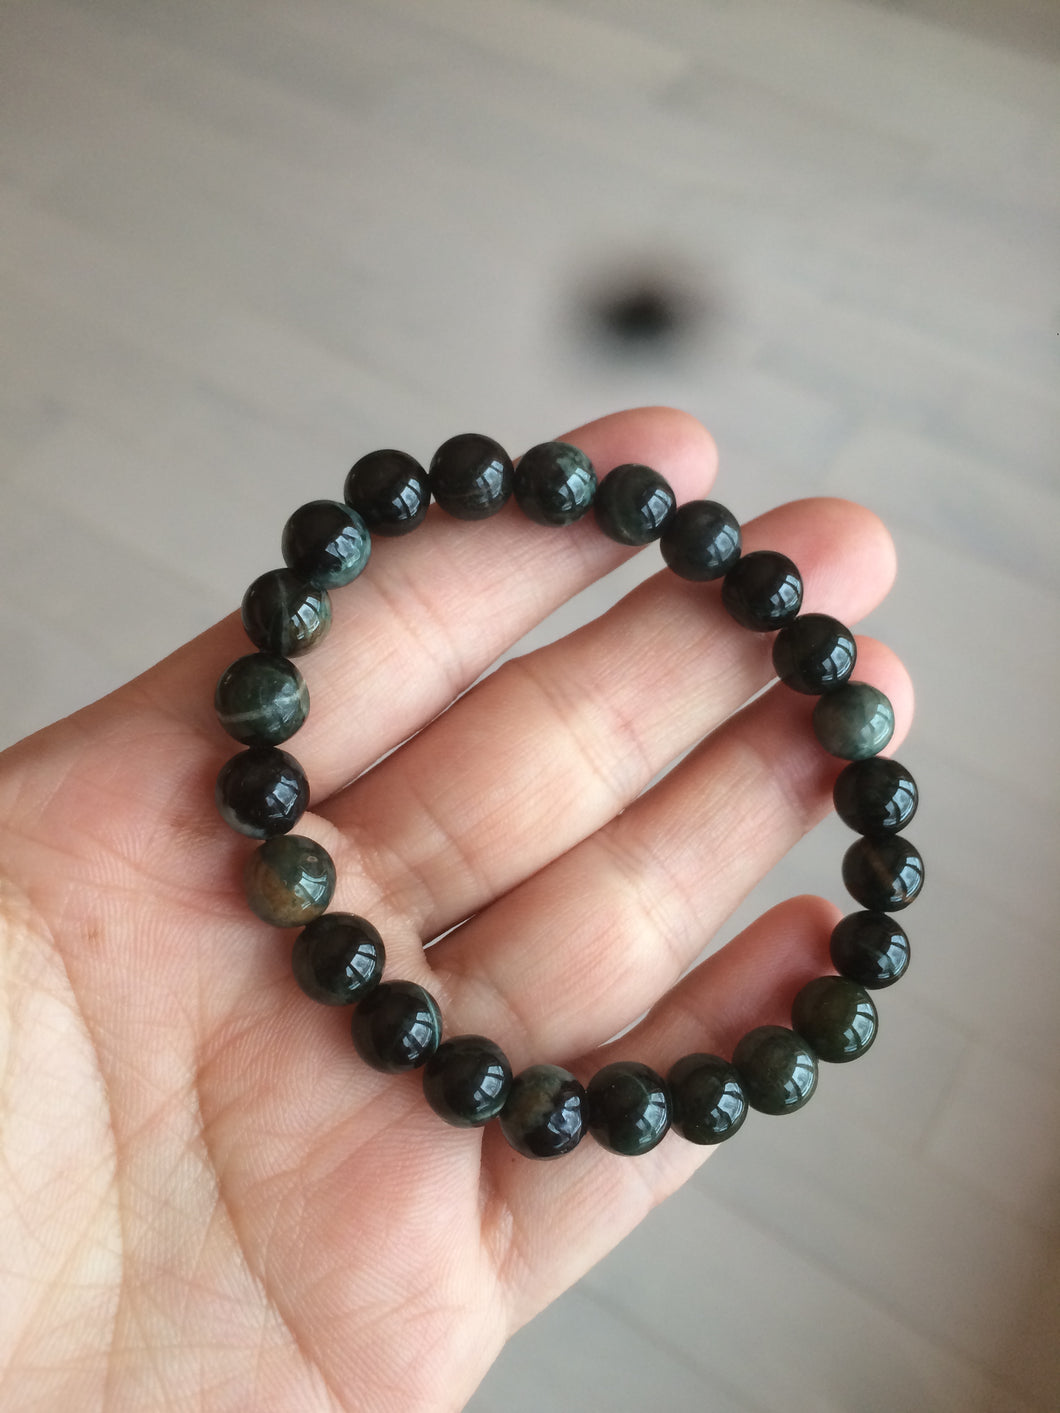 7.5-8mm 100% natural black/blue/green/brown(Wuji) jadeite jade beads bracelet AK8 (Add on item, not sale individually. )